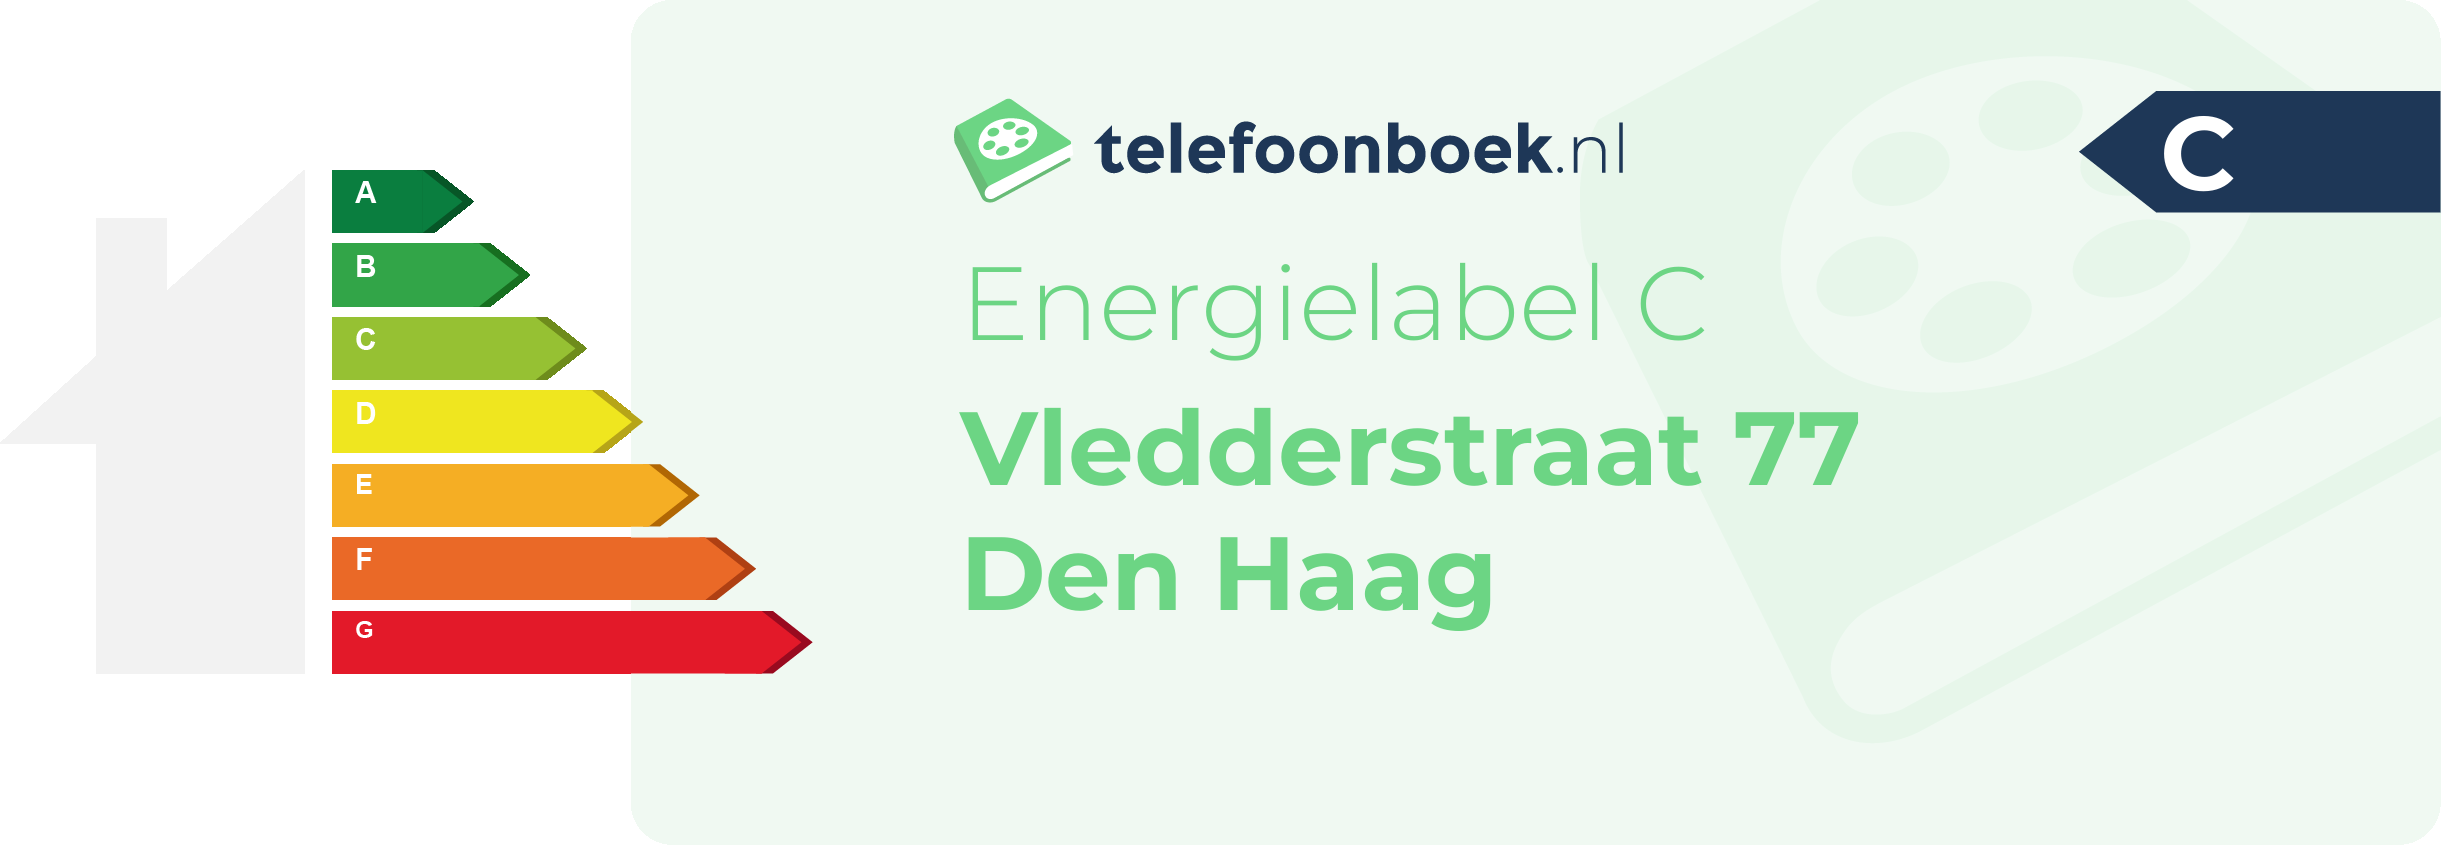 Energielabel Vledderstraat 77 Den Haag